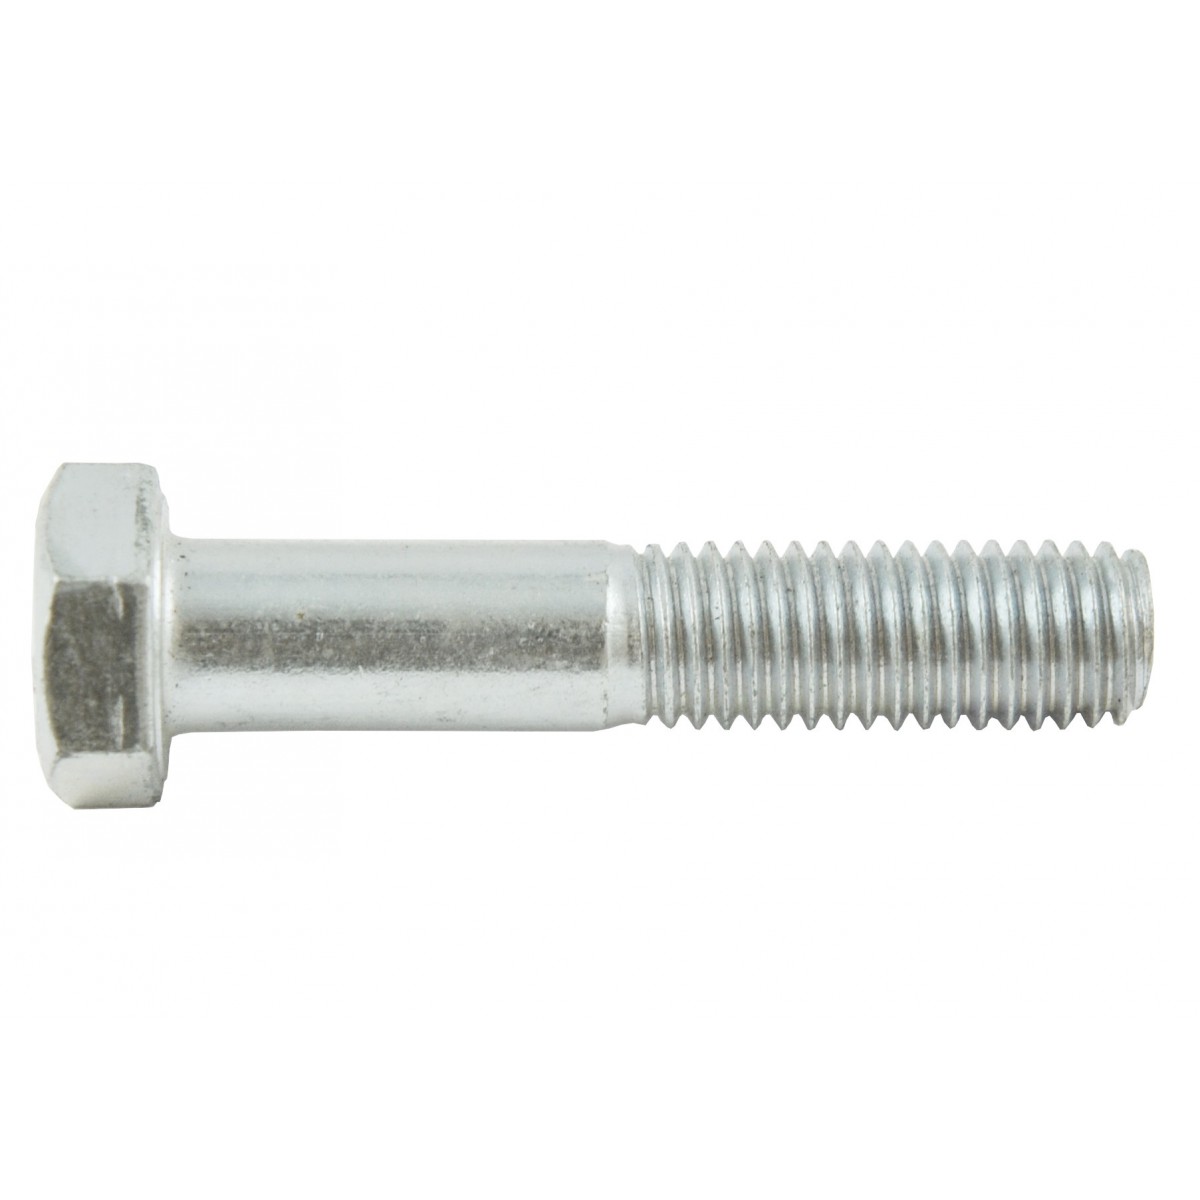 M12x60 screw - hardness 5,6